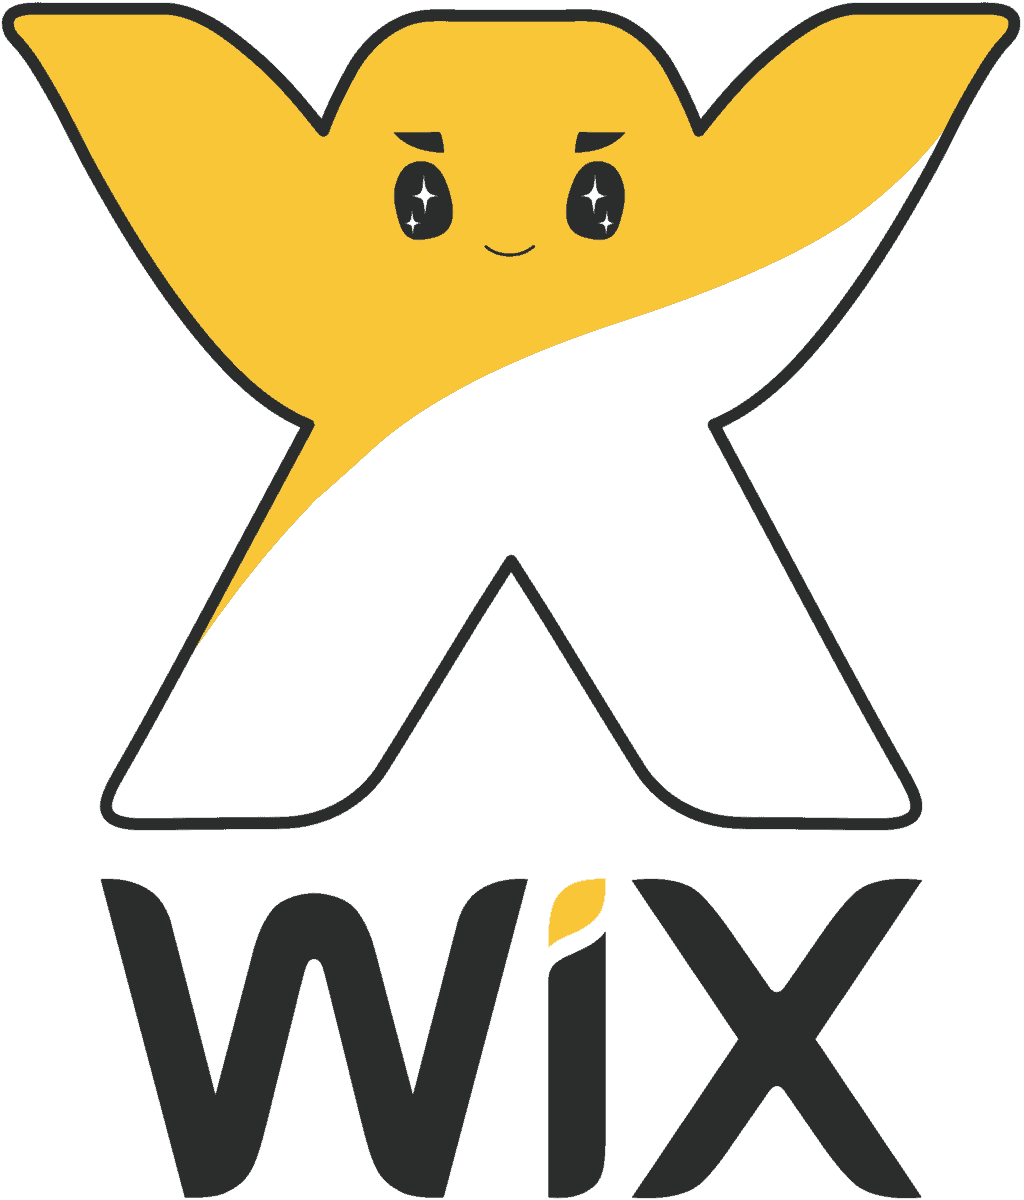 Wix Video